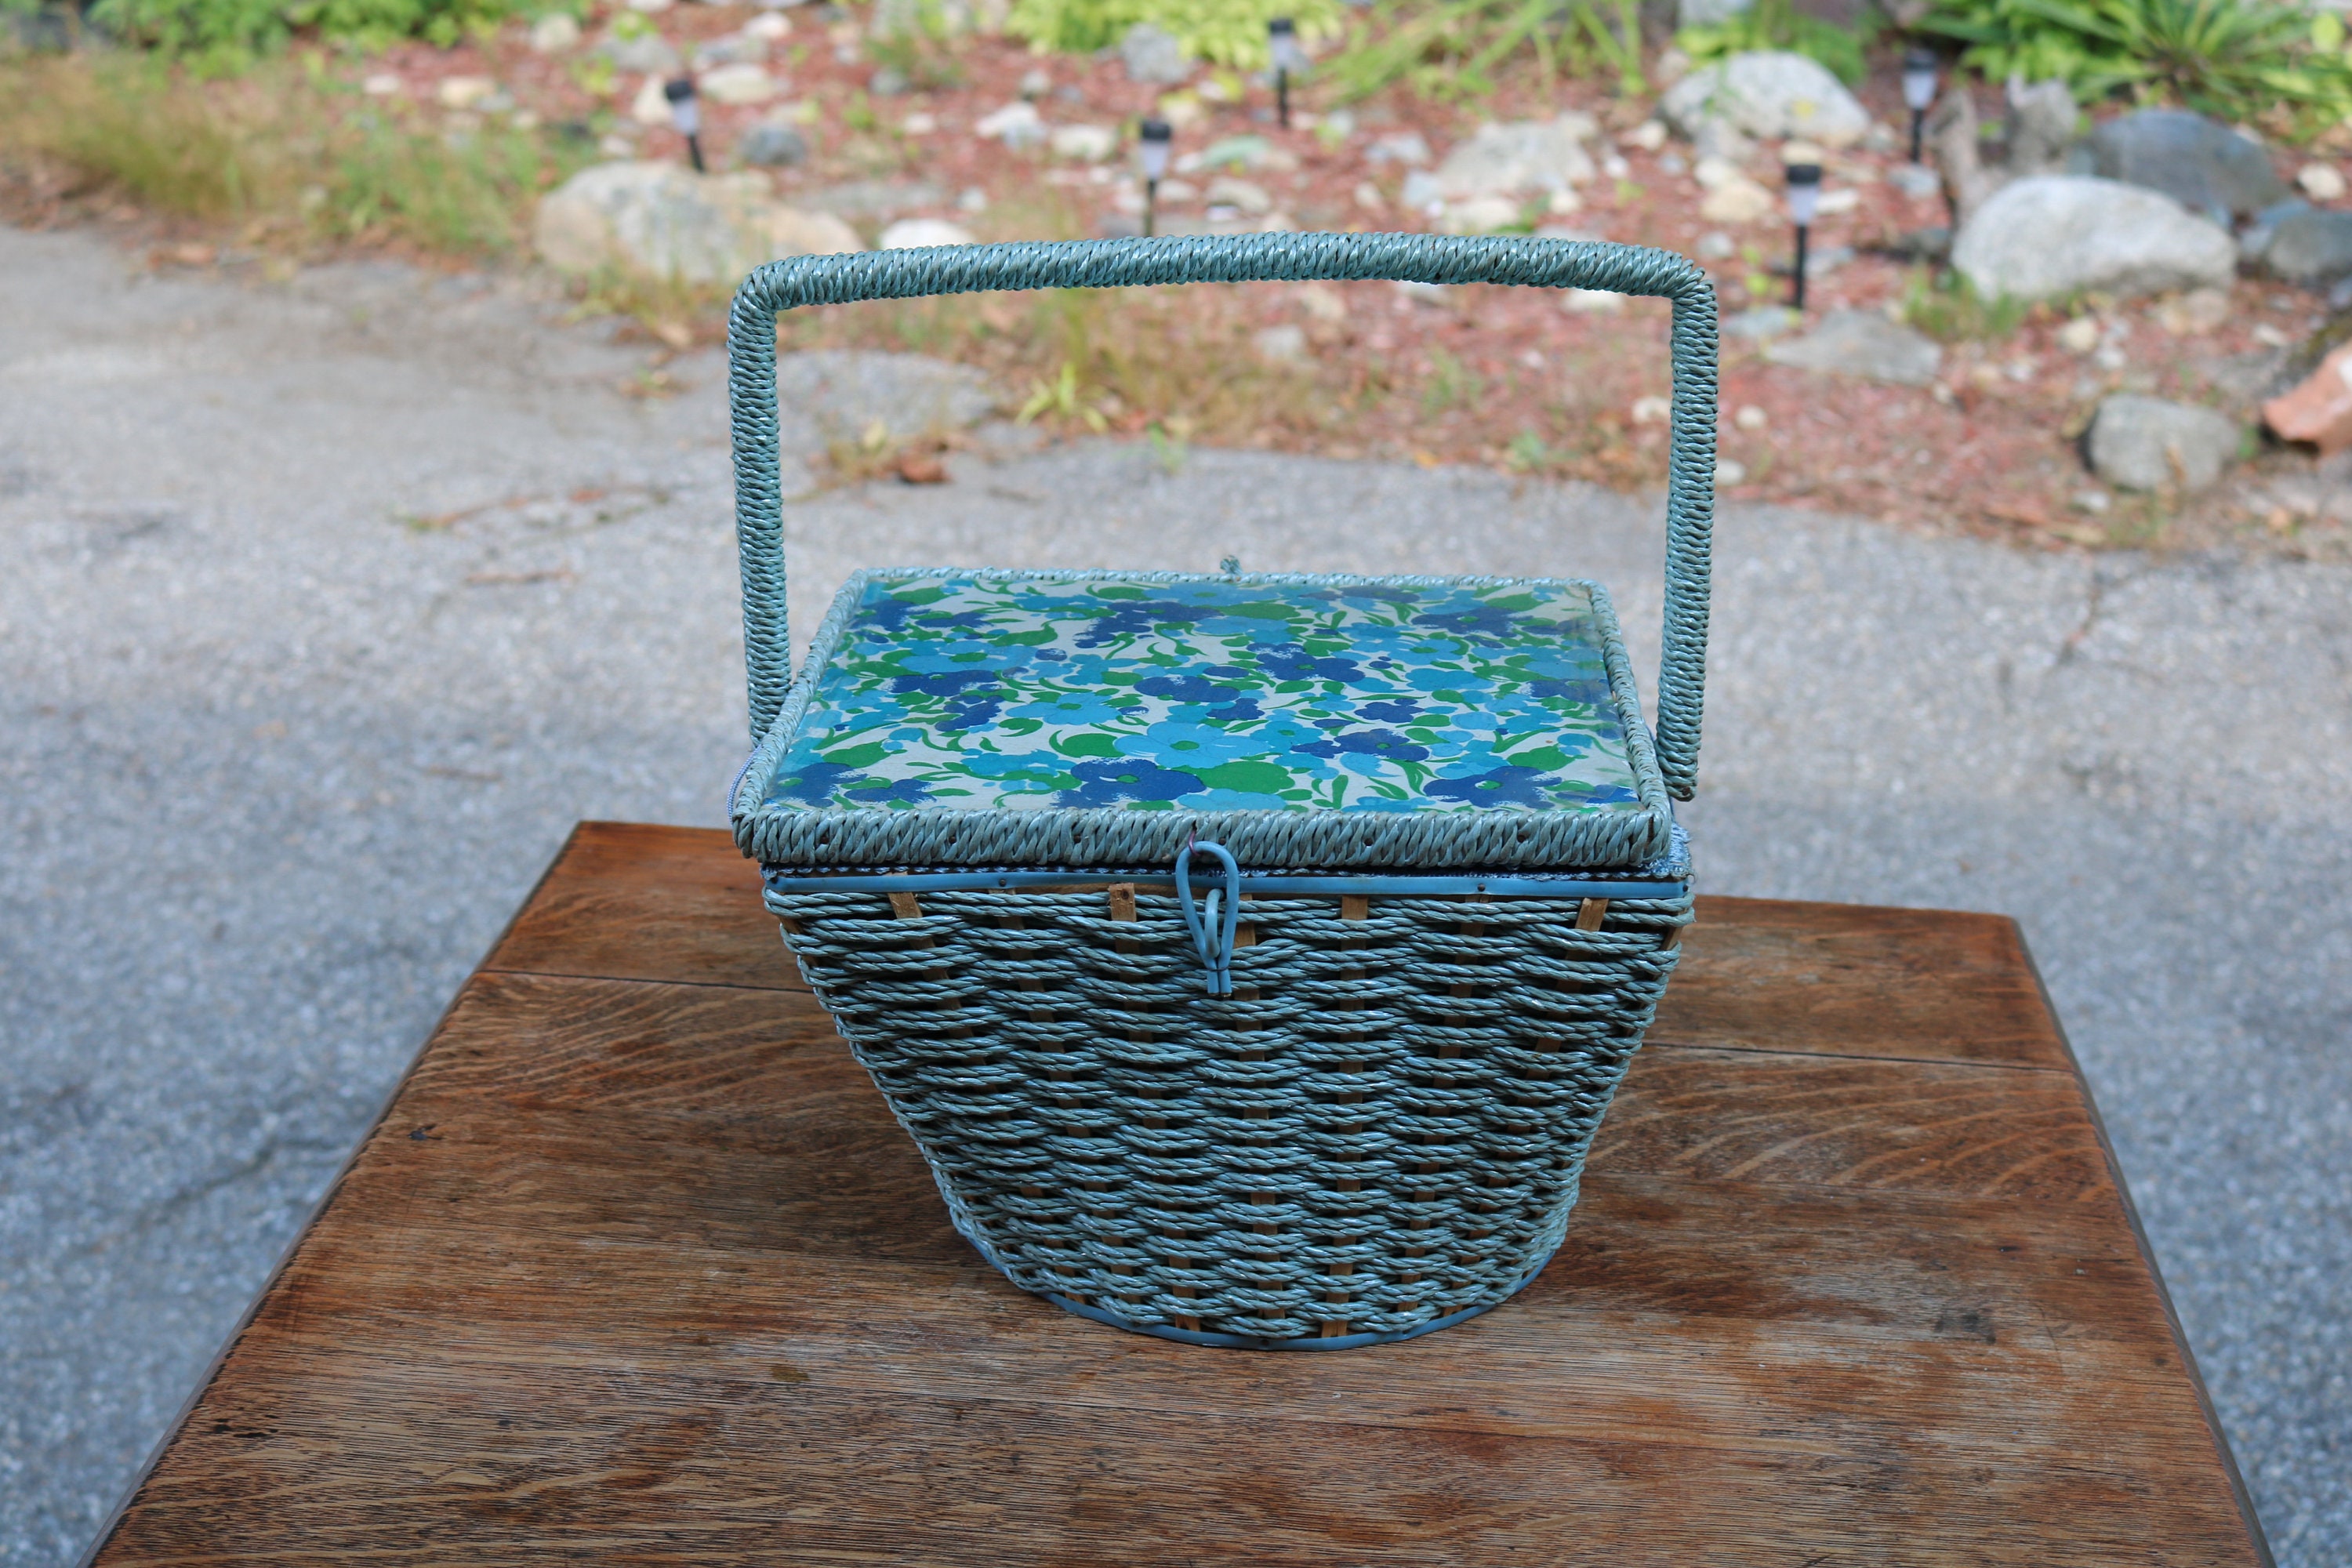 Vintage Singer Wicker Sewing Basket, Rattan Craft Caddy, Mod Flower Print  Lid, Made in Japan 